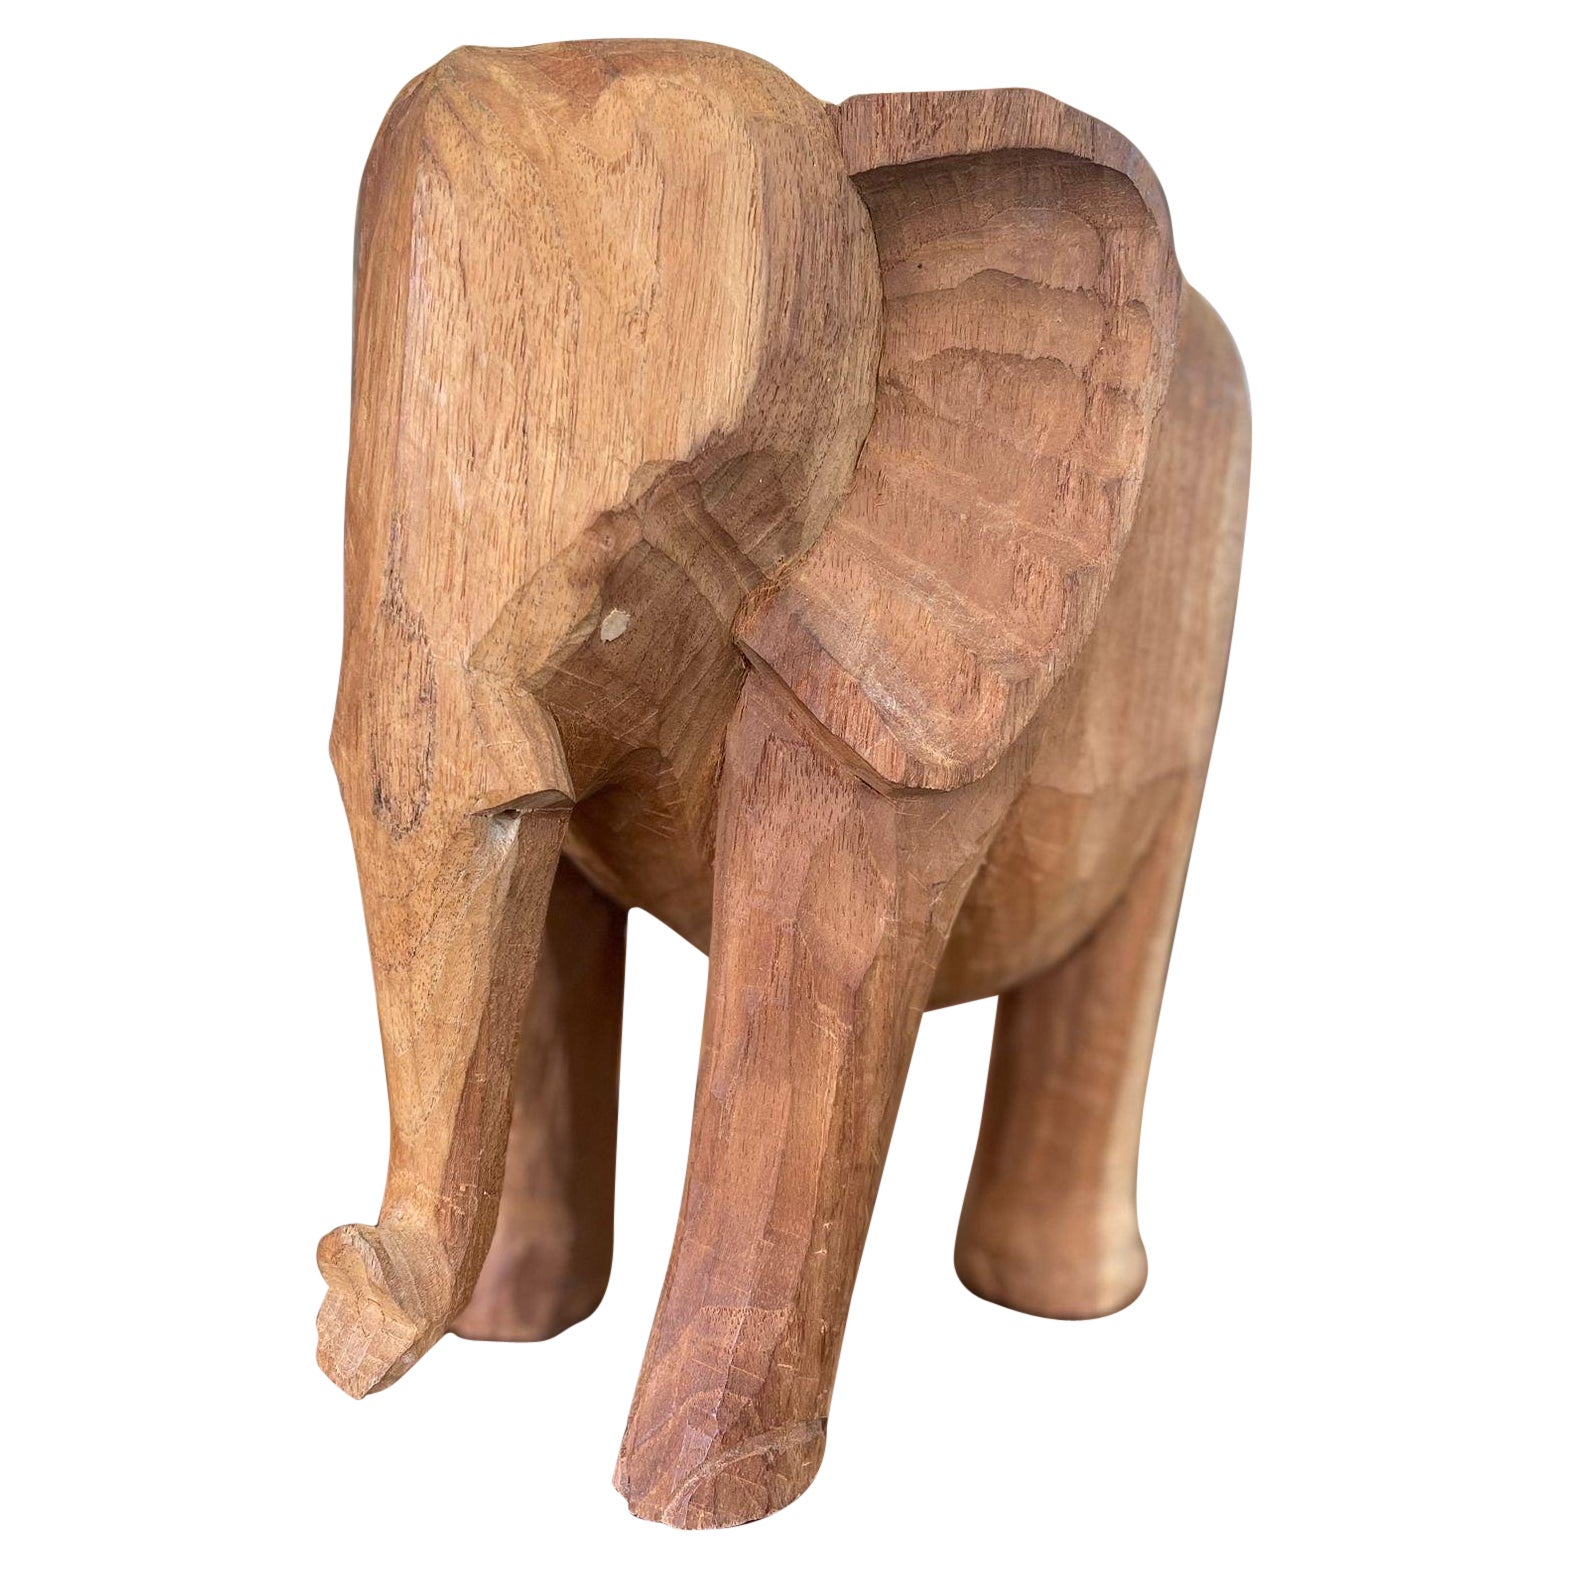 Vintage Wooden Carved Elephant Sculpture Stand For Sale